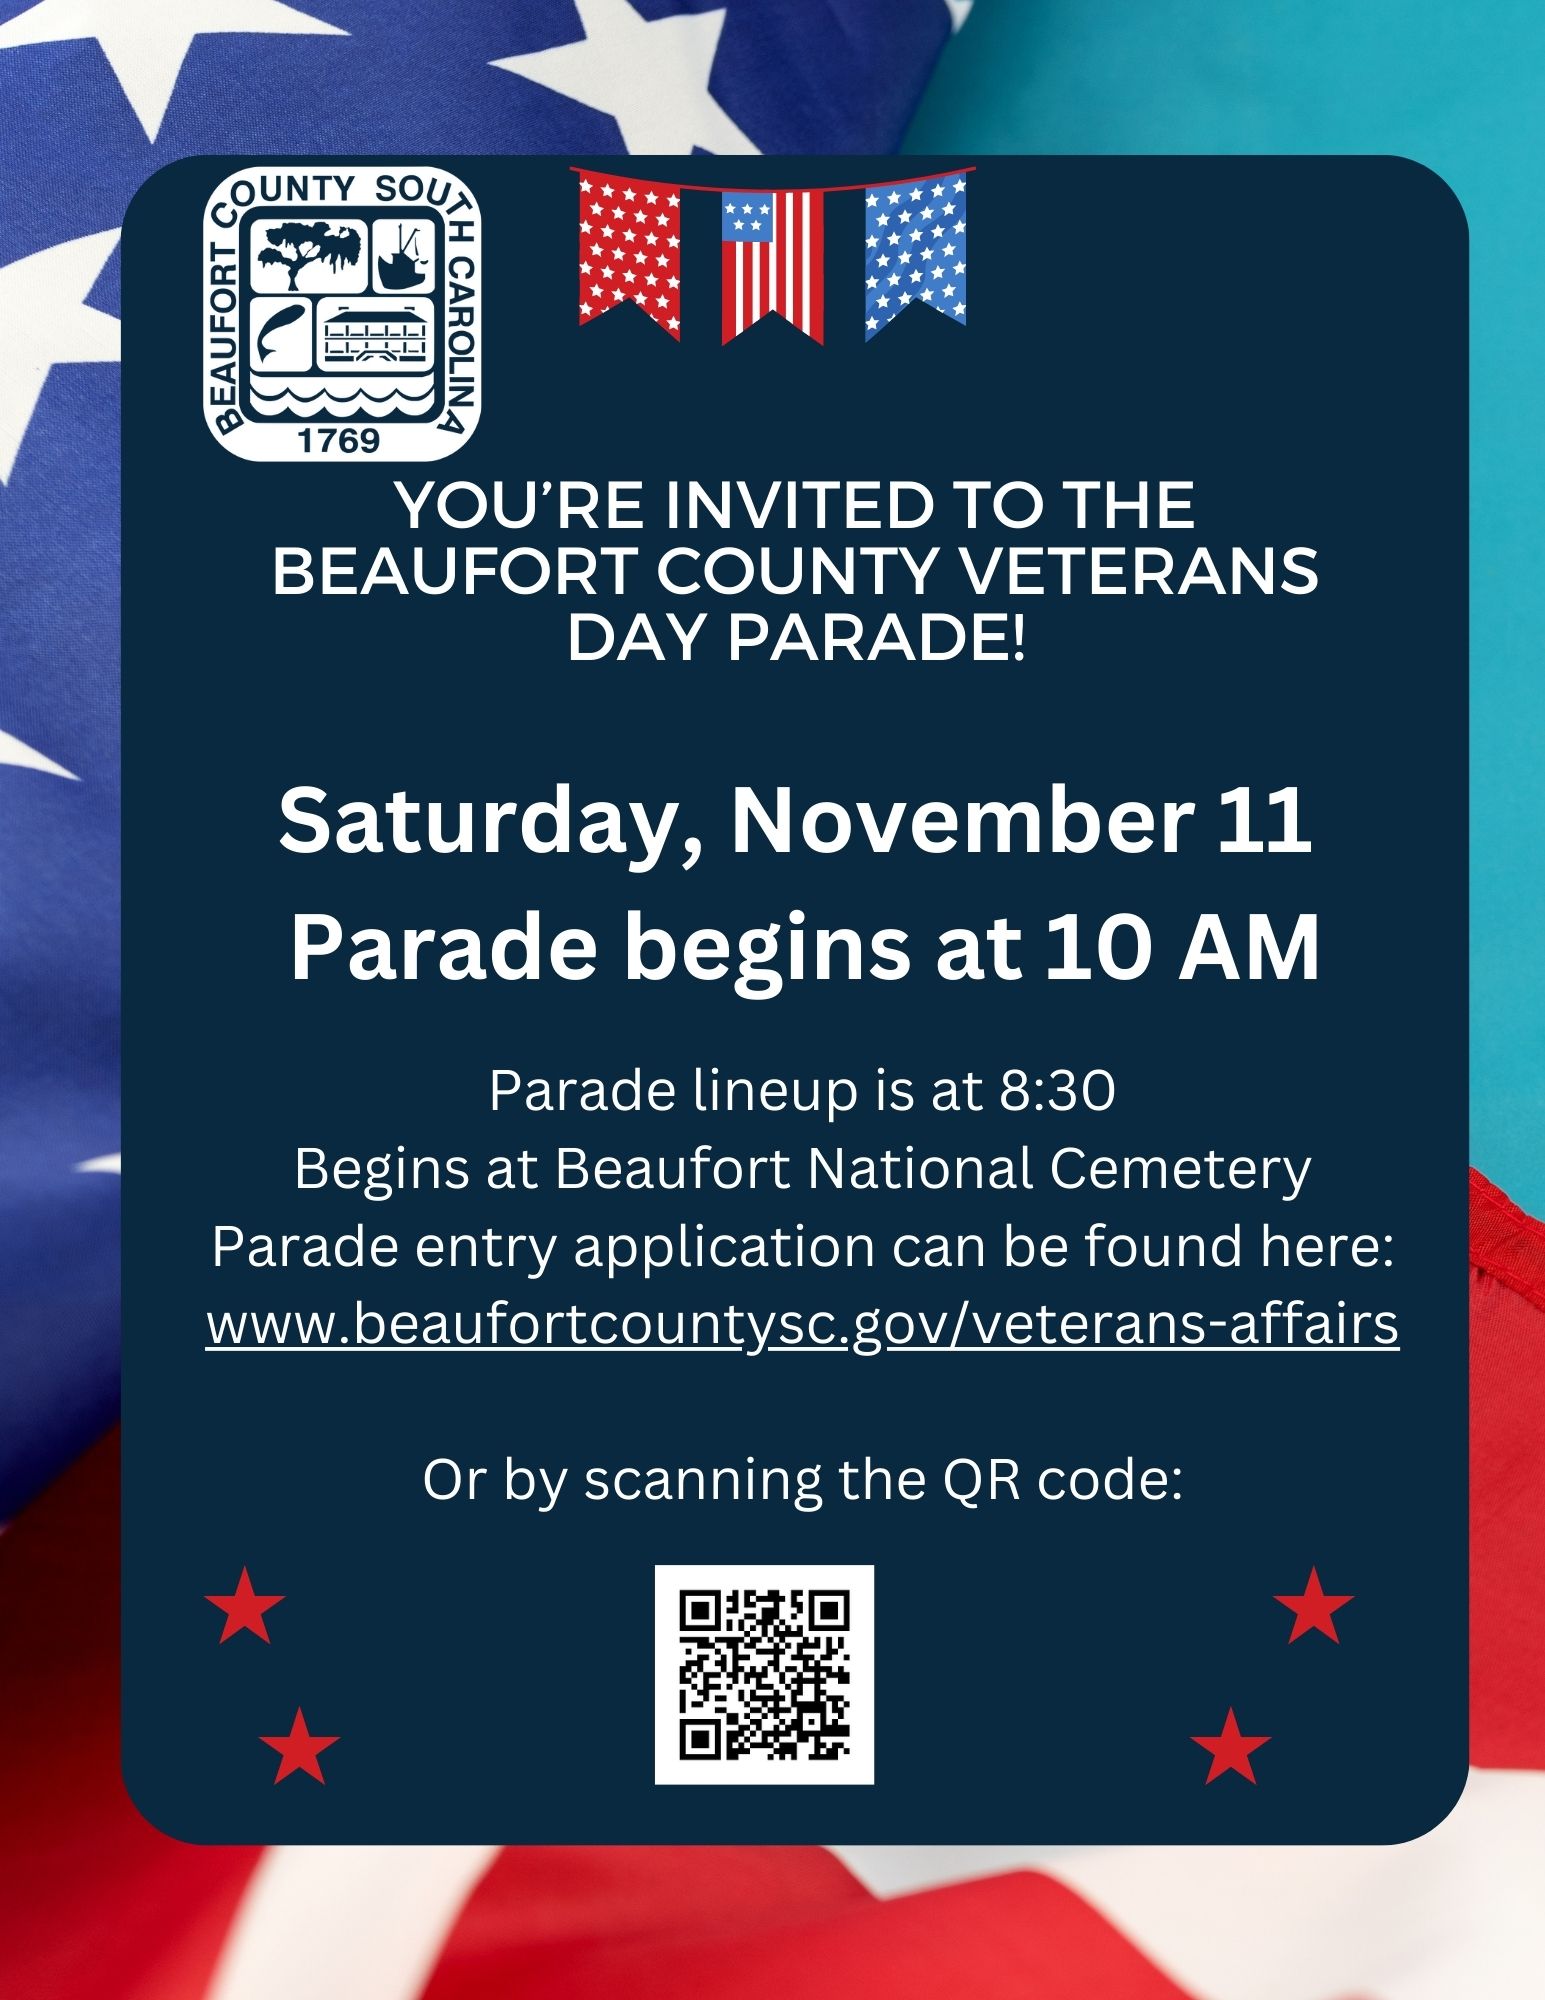 Beaufort County  Veterans Affairs Department Hosting Veterans Day Parade